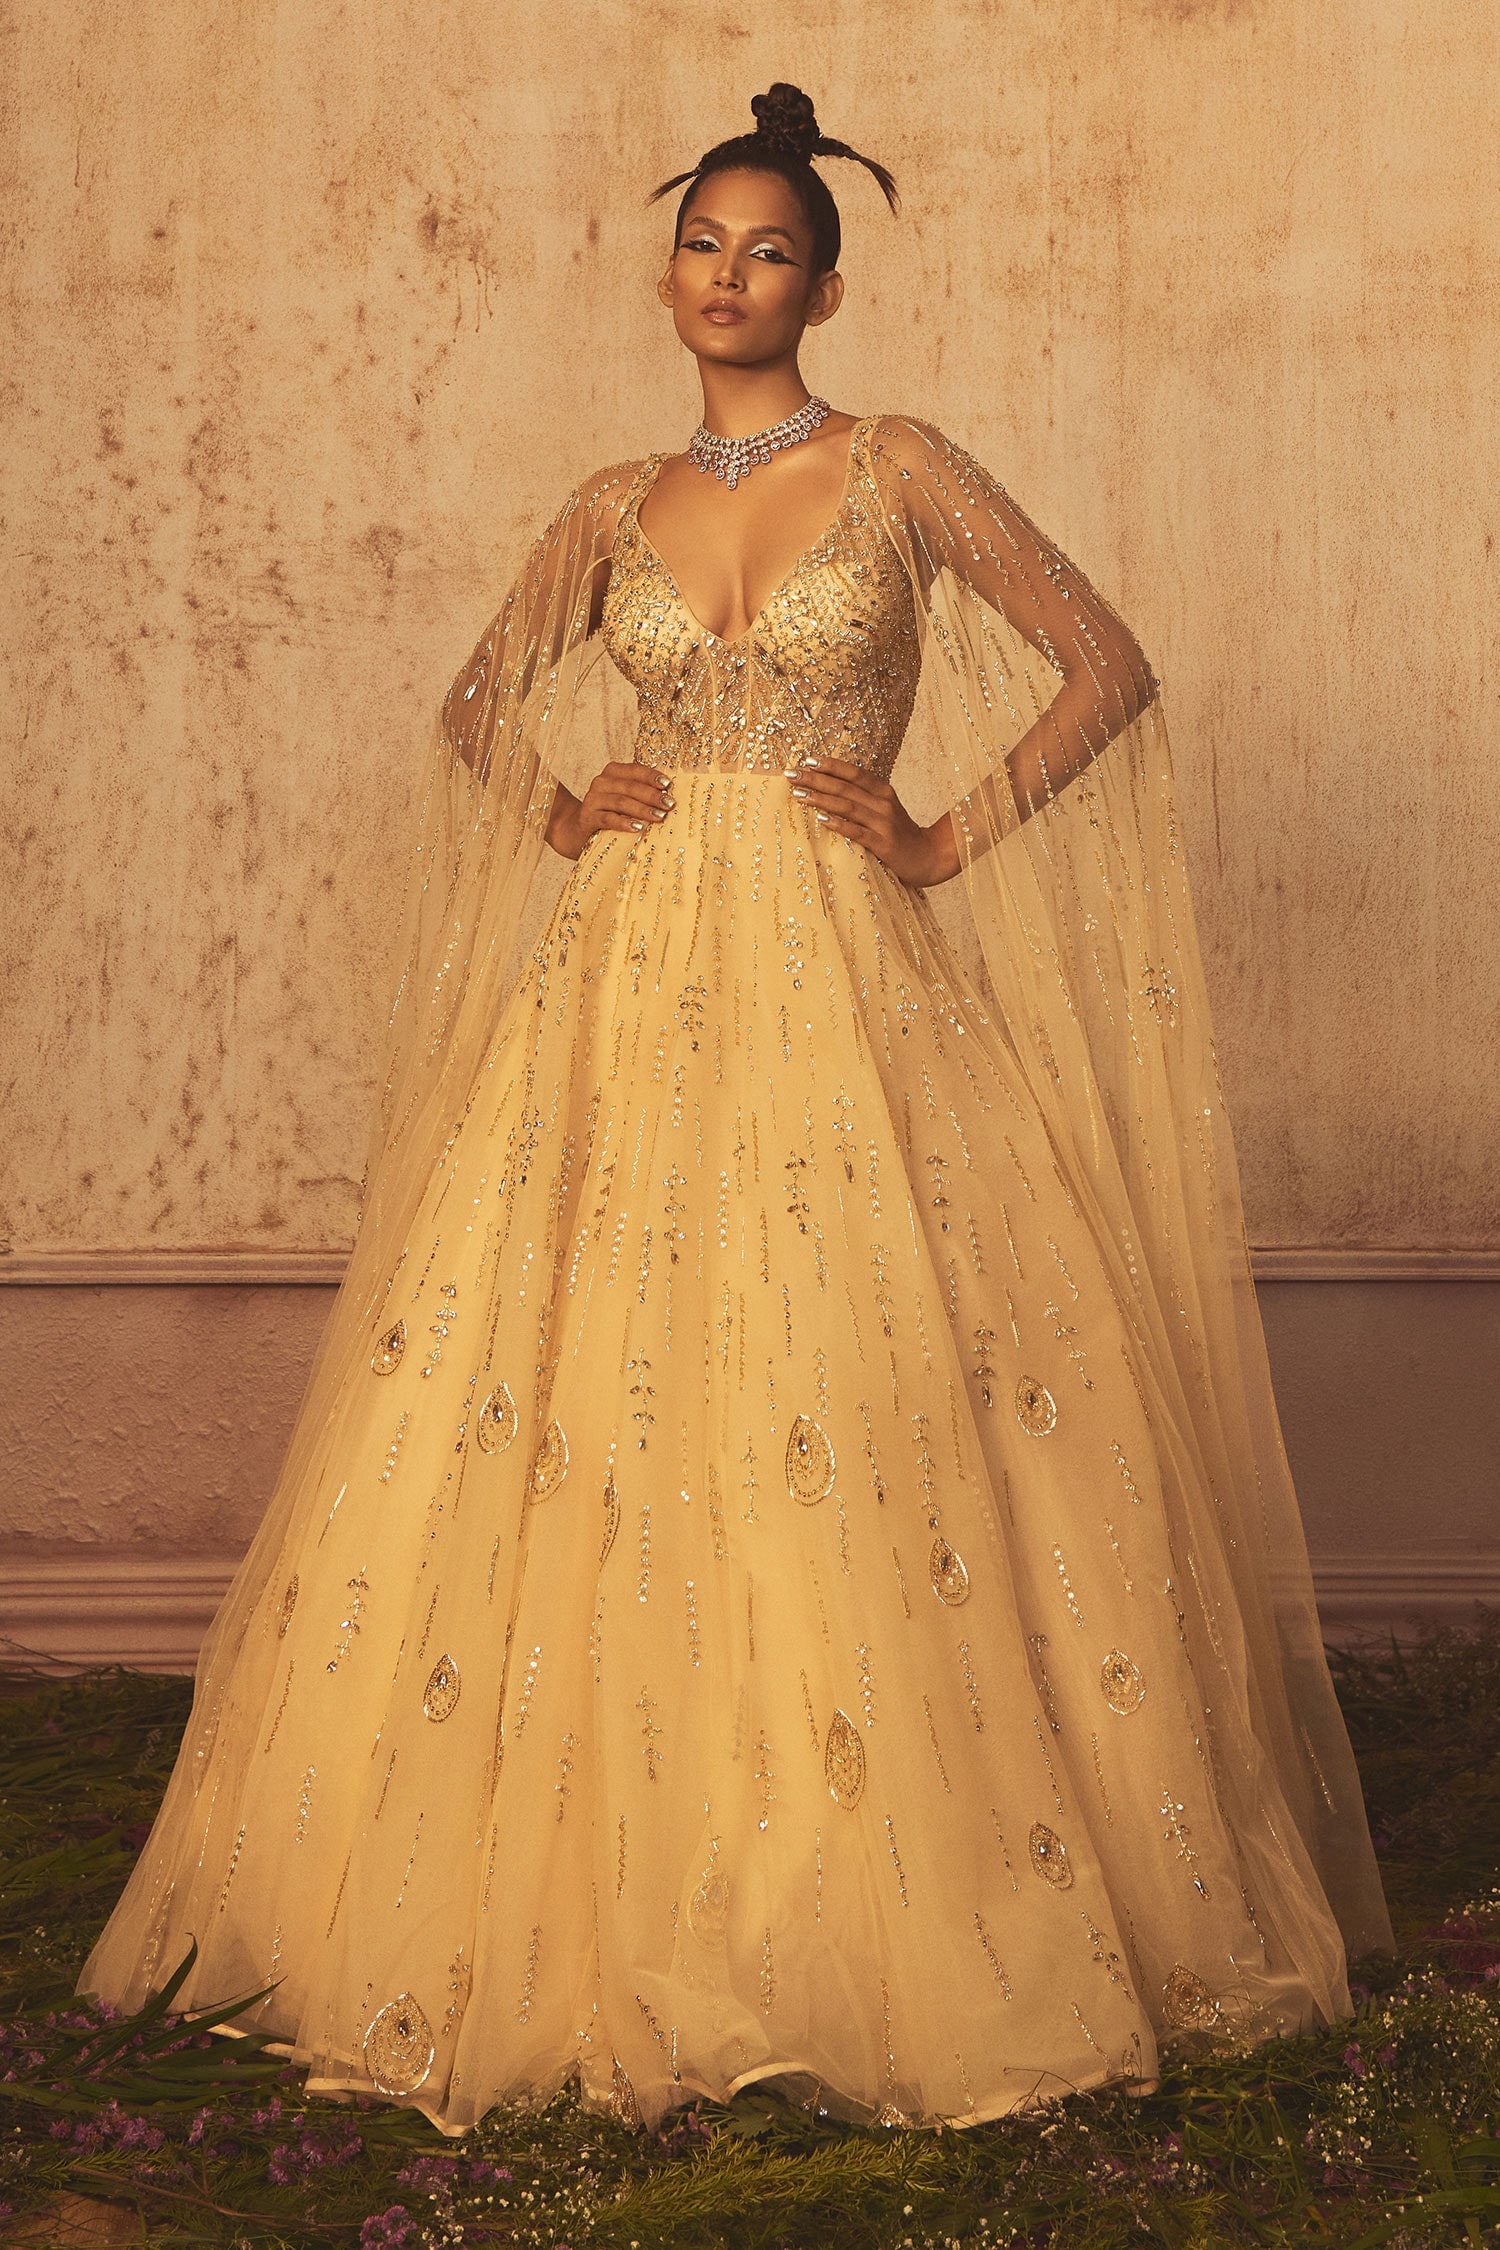 Iridescent Details for a Rose Gold Castle Wedding | Rose gold wedding dress,  Gold wedding dress, Plus wedding dresses